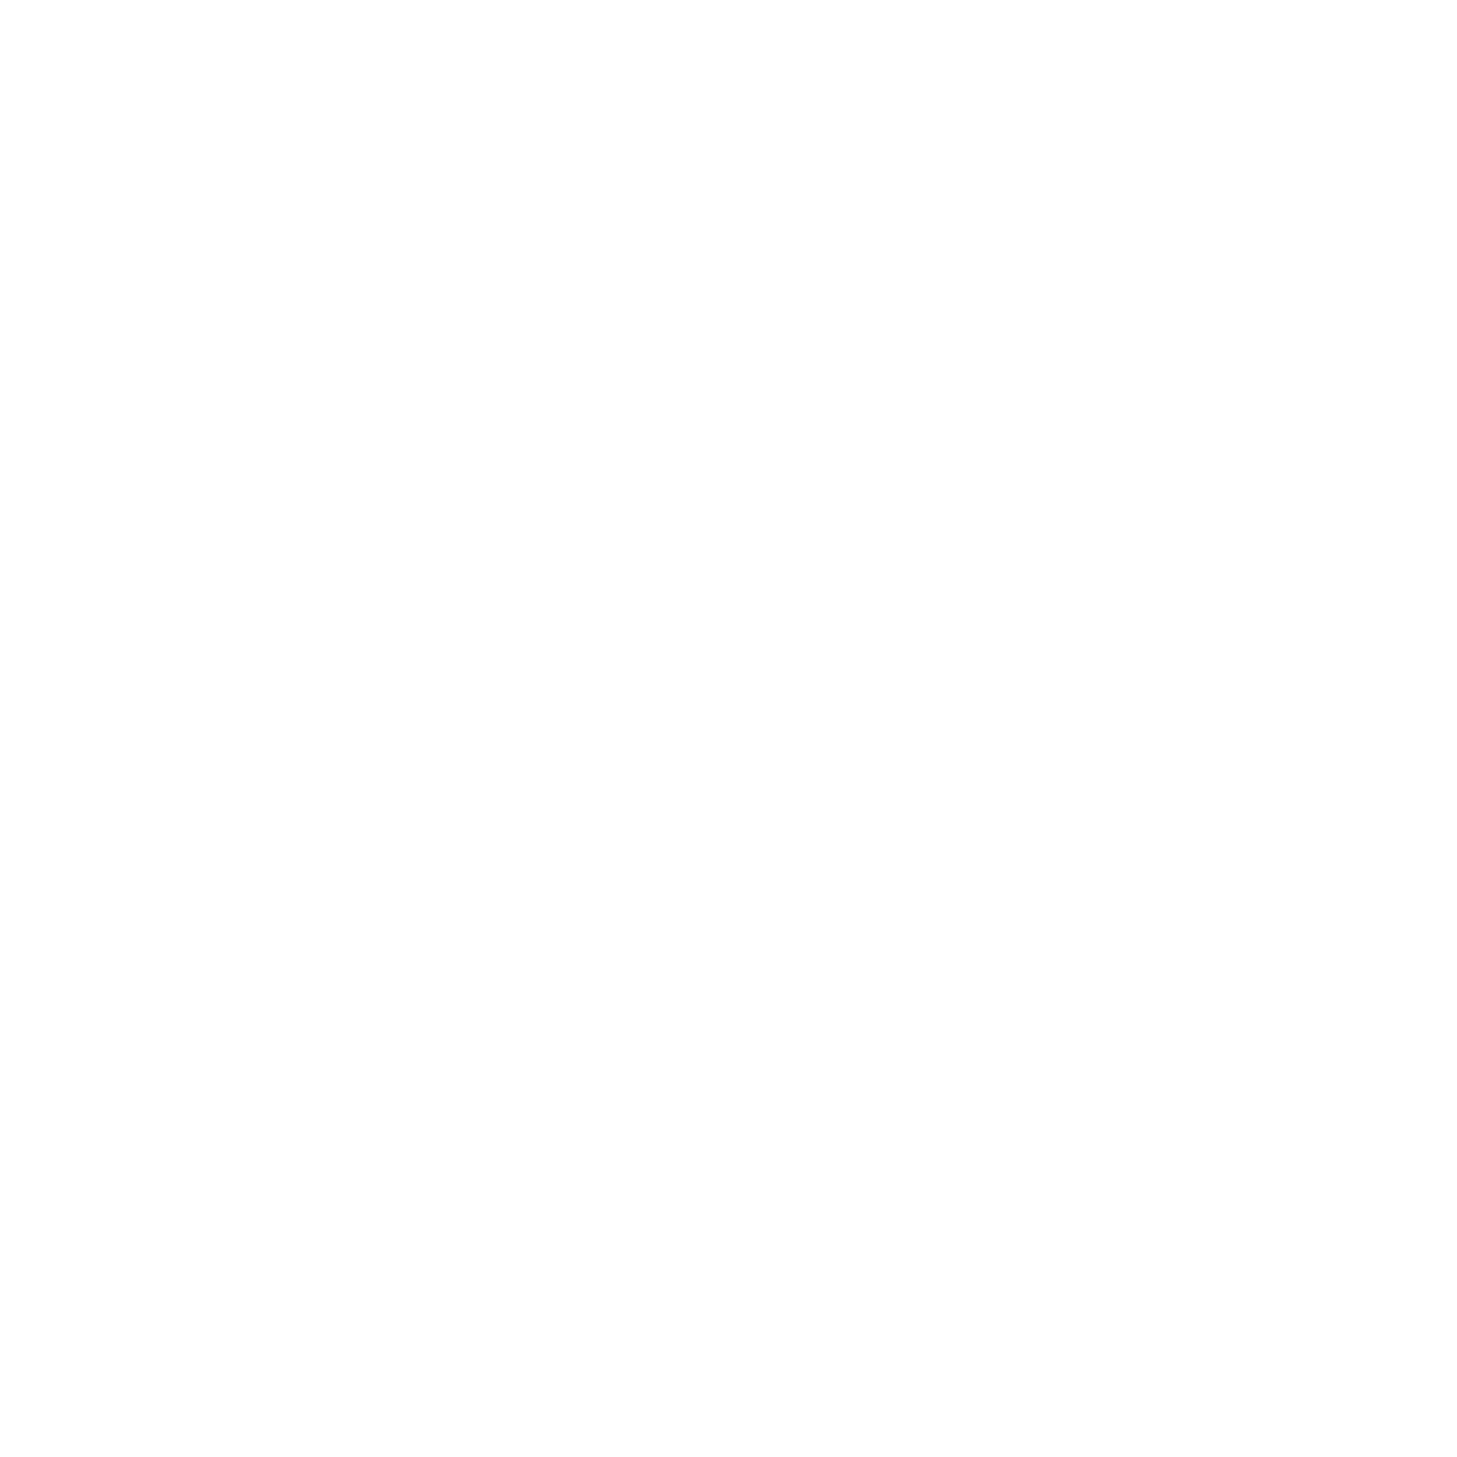 Syeda Fatima